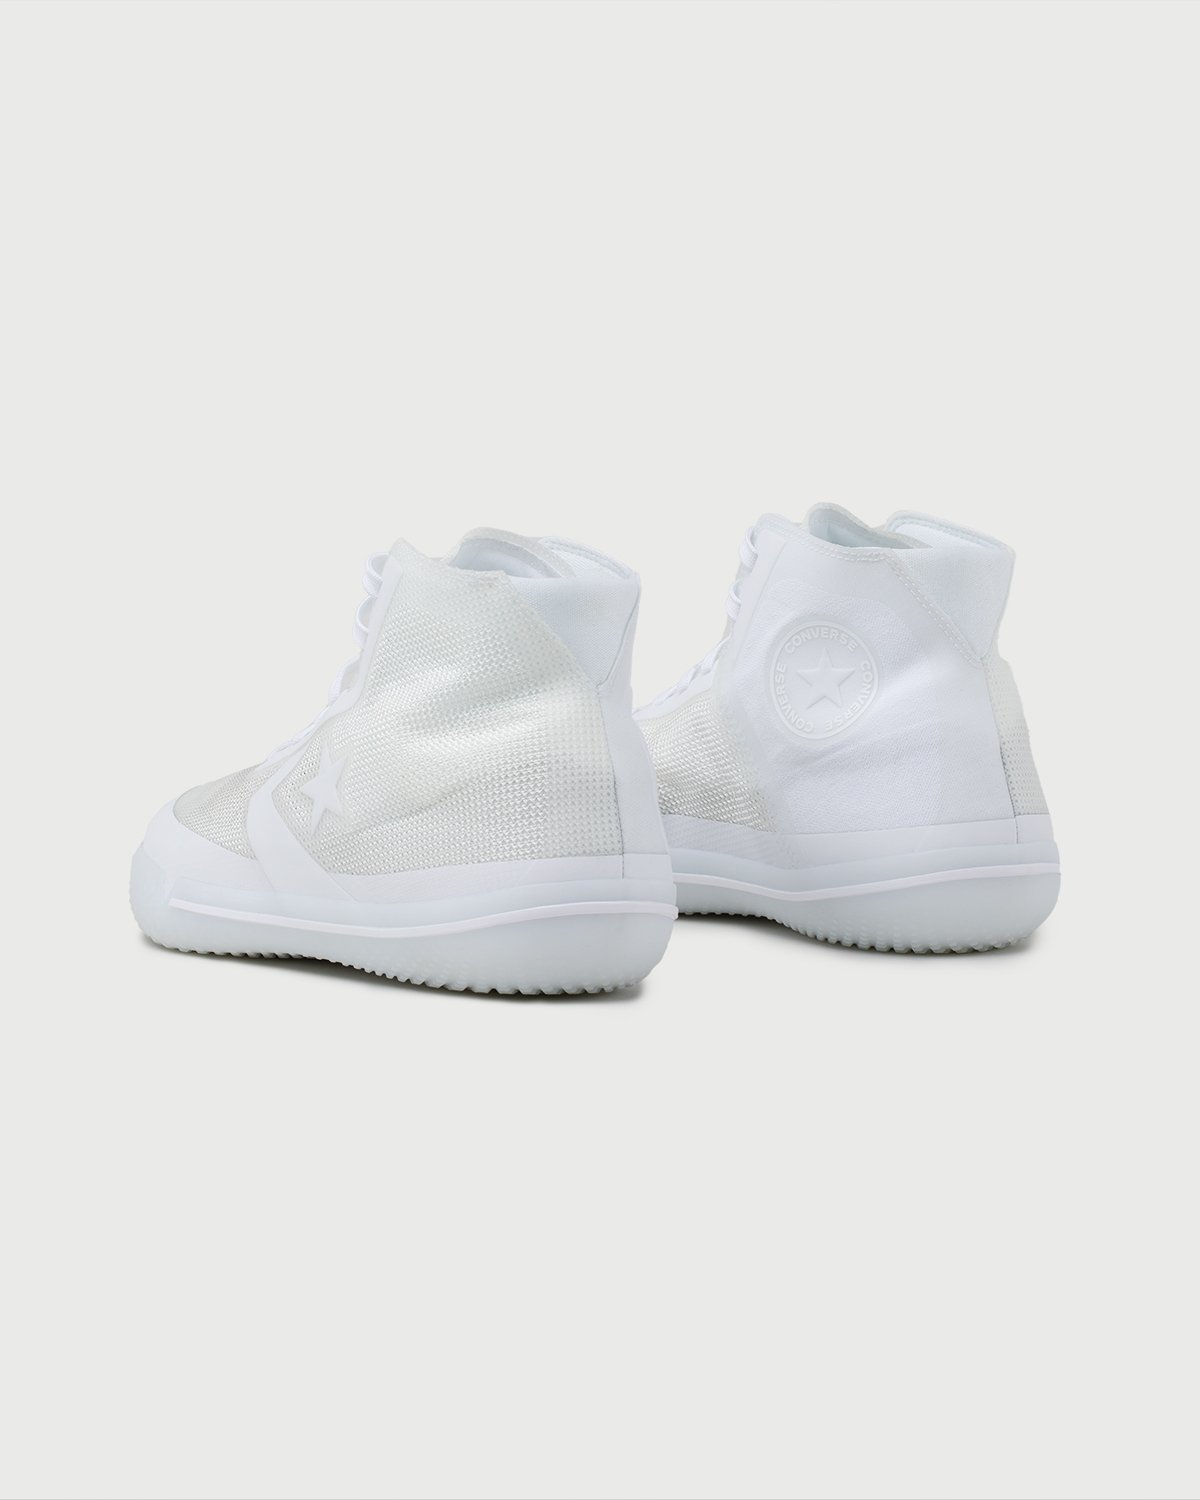 Converse - All Star Pro Bb Hi White - Footwear - White - Image 3